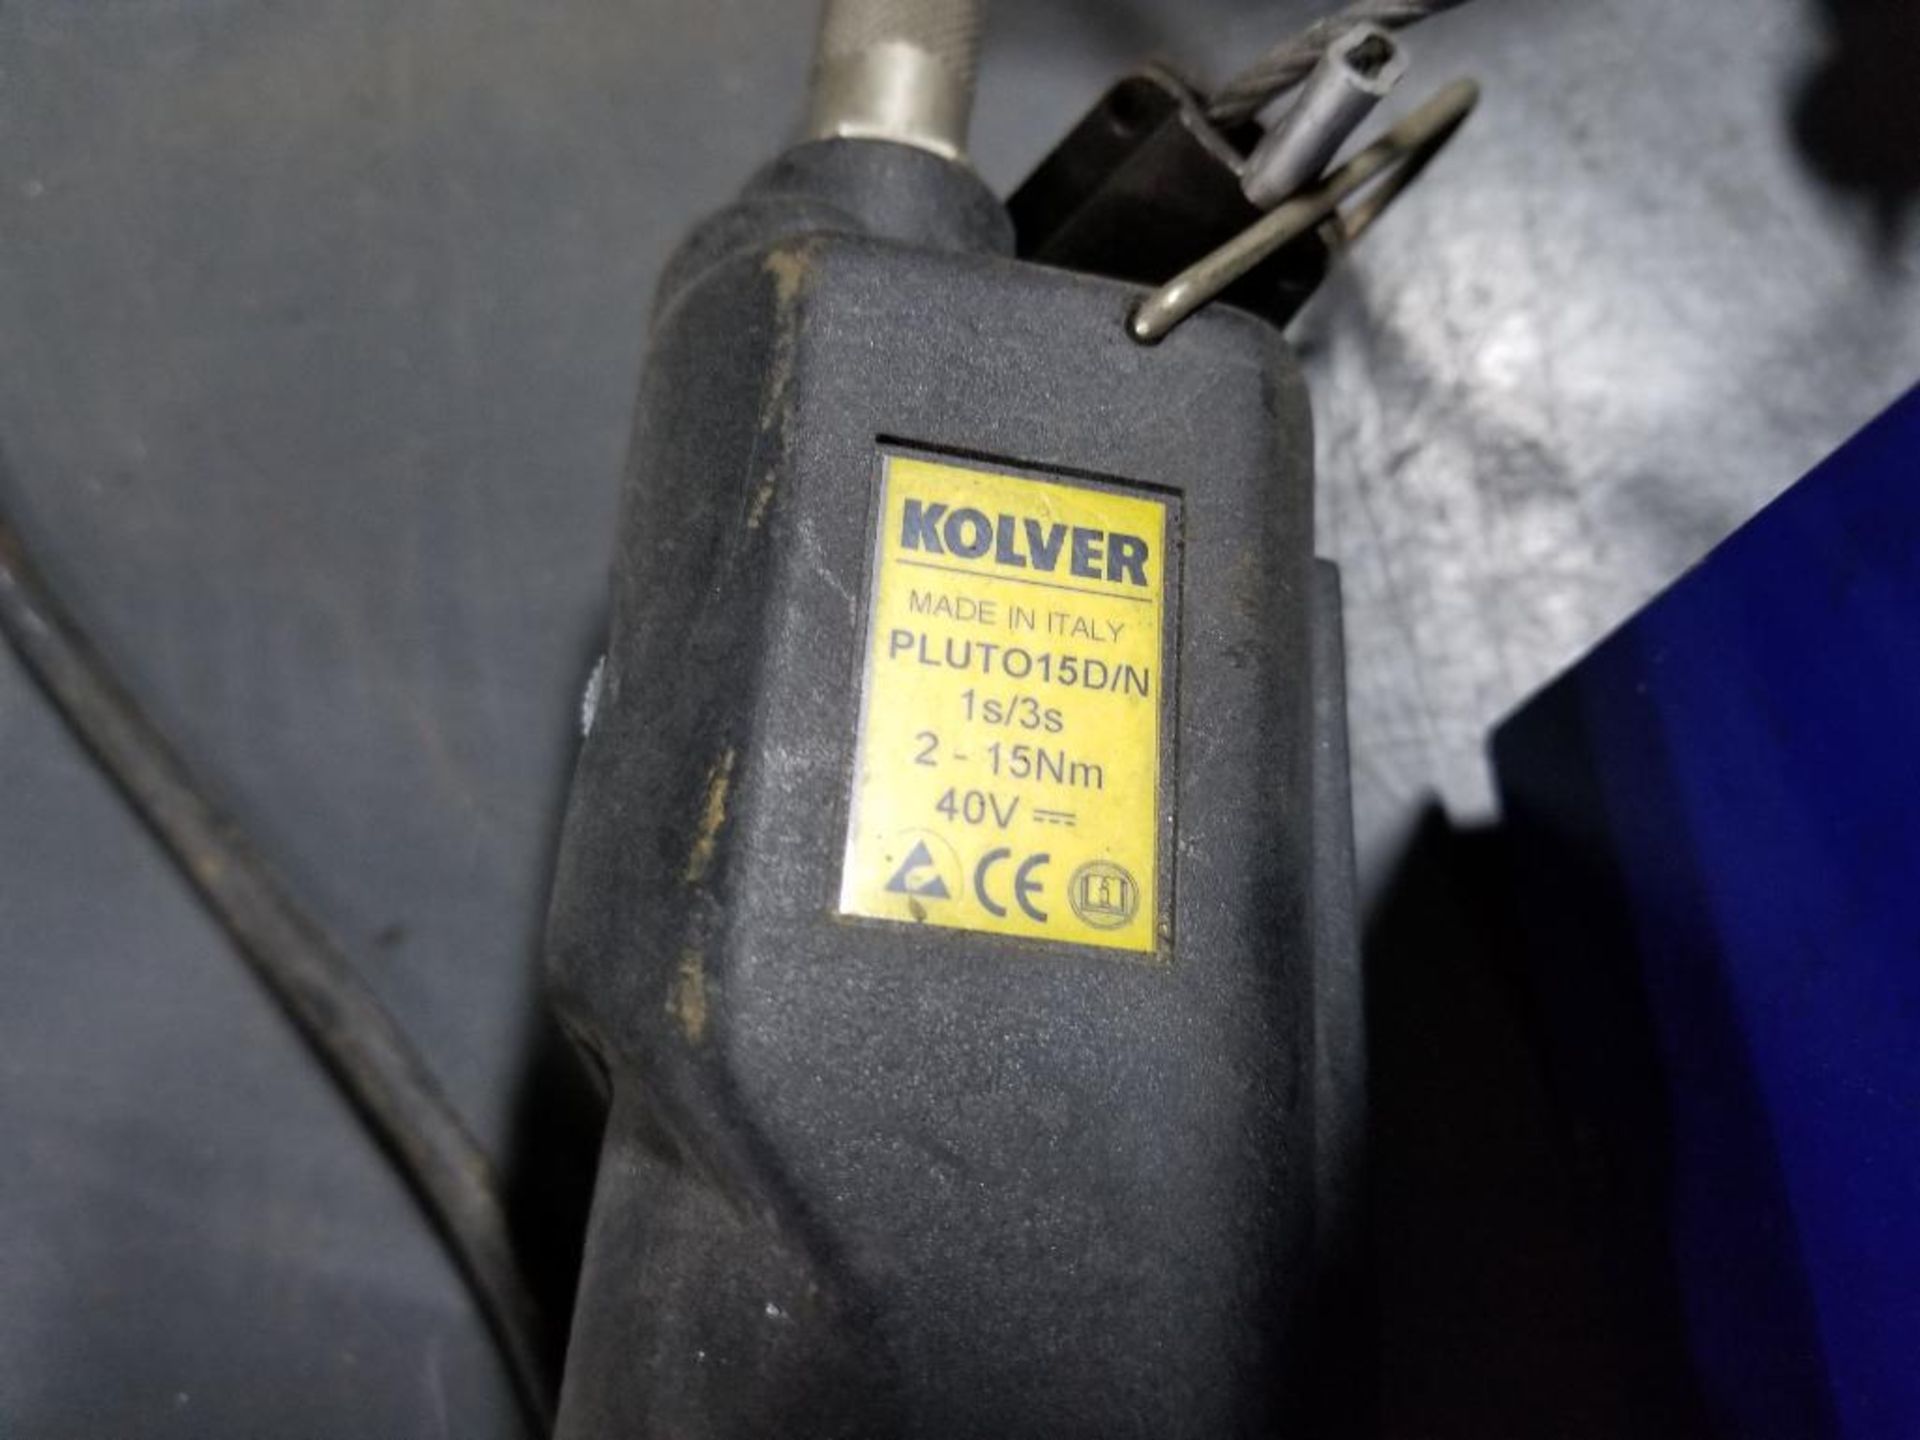 Kolver EDU-2AE programmable controller / torque driver. Kolver PLUTO15D/N. With 7228-01 balancer. - Image 4 of 6